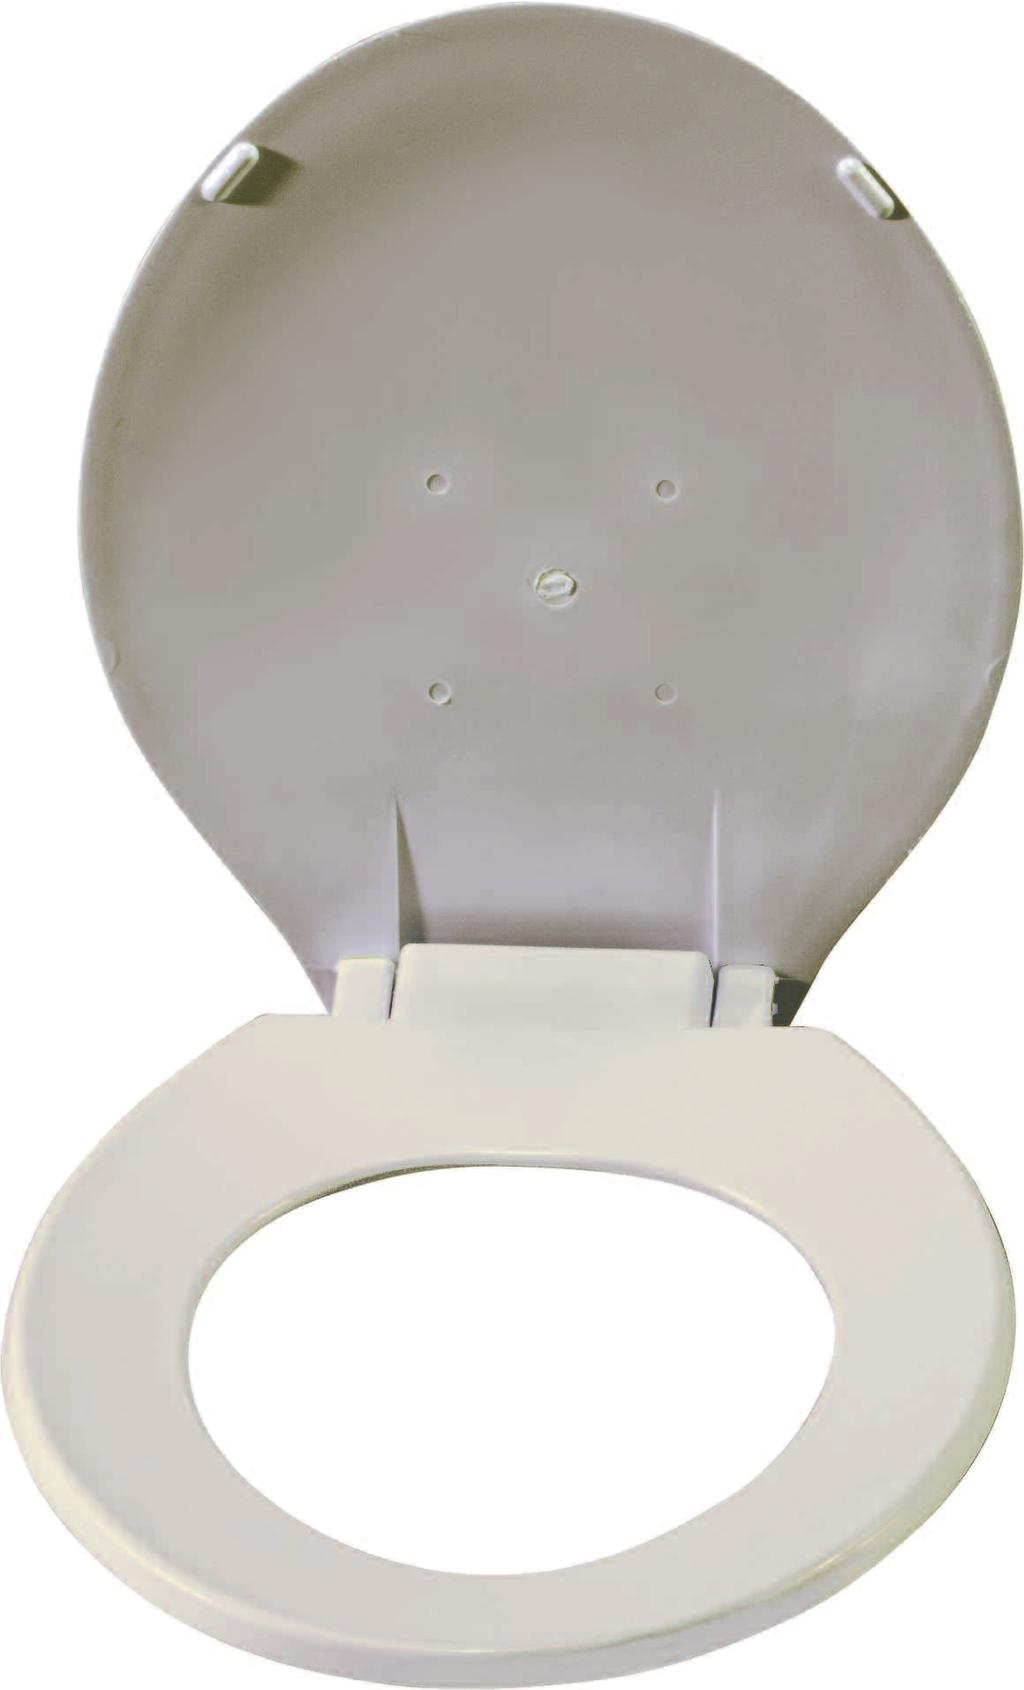 11160-1 (Oblong) Oblong Oversized Toilet with Lid (16 1 /2" Depth) 11160-1 1/bx